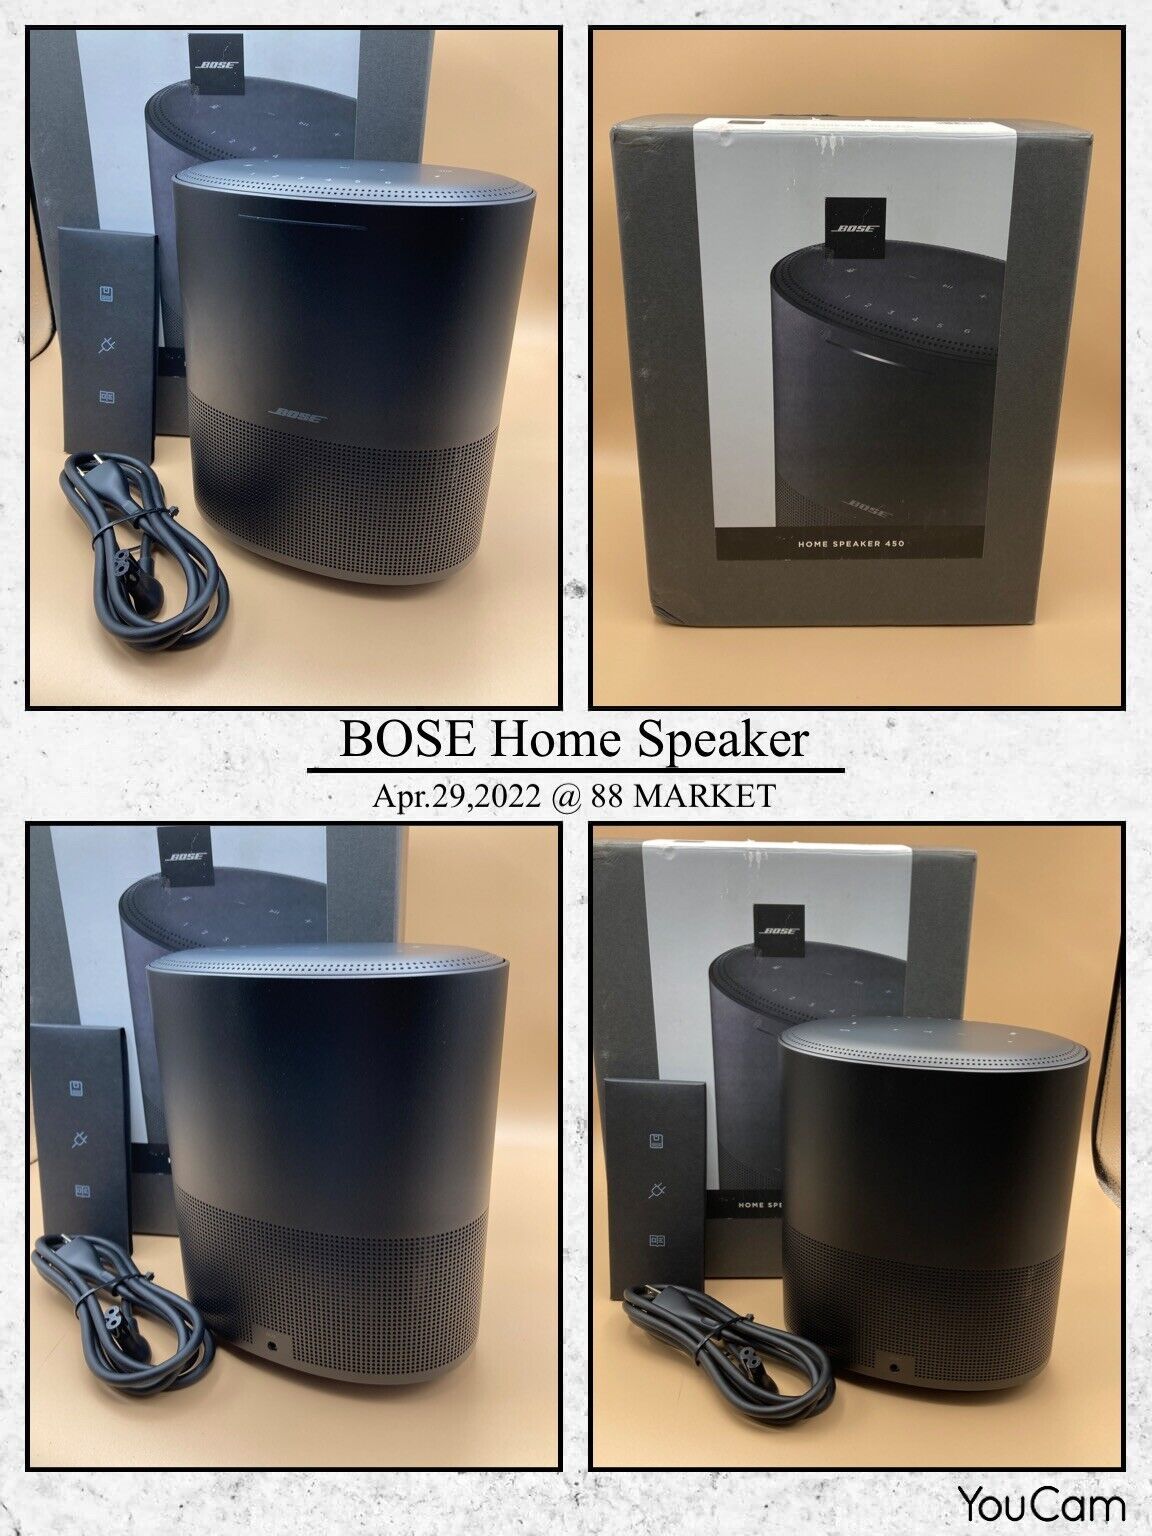 Bose Home Speaker 450 - Black for sale online | eBay